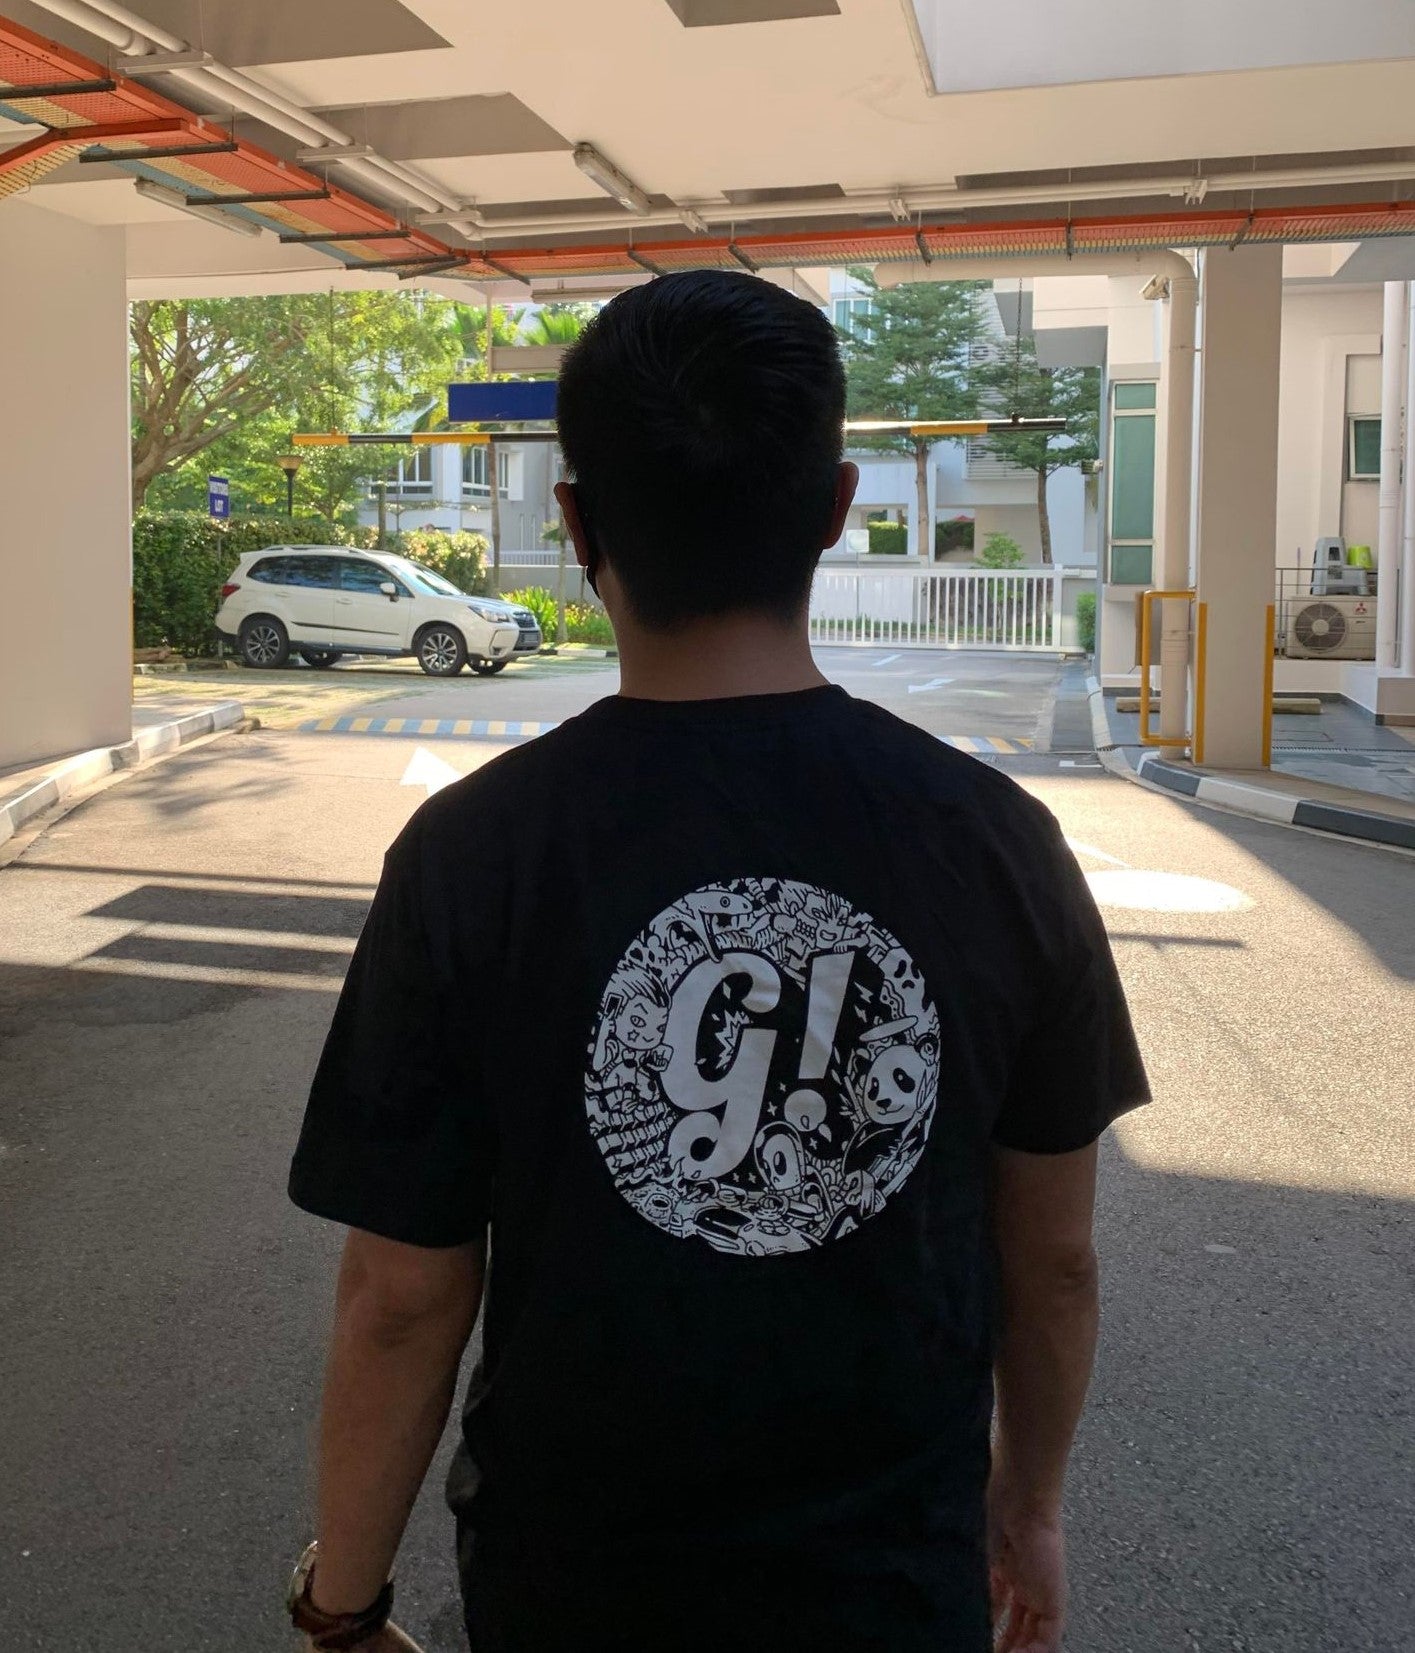 G Cables T-Shirt